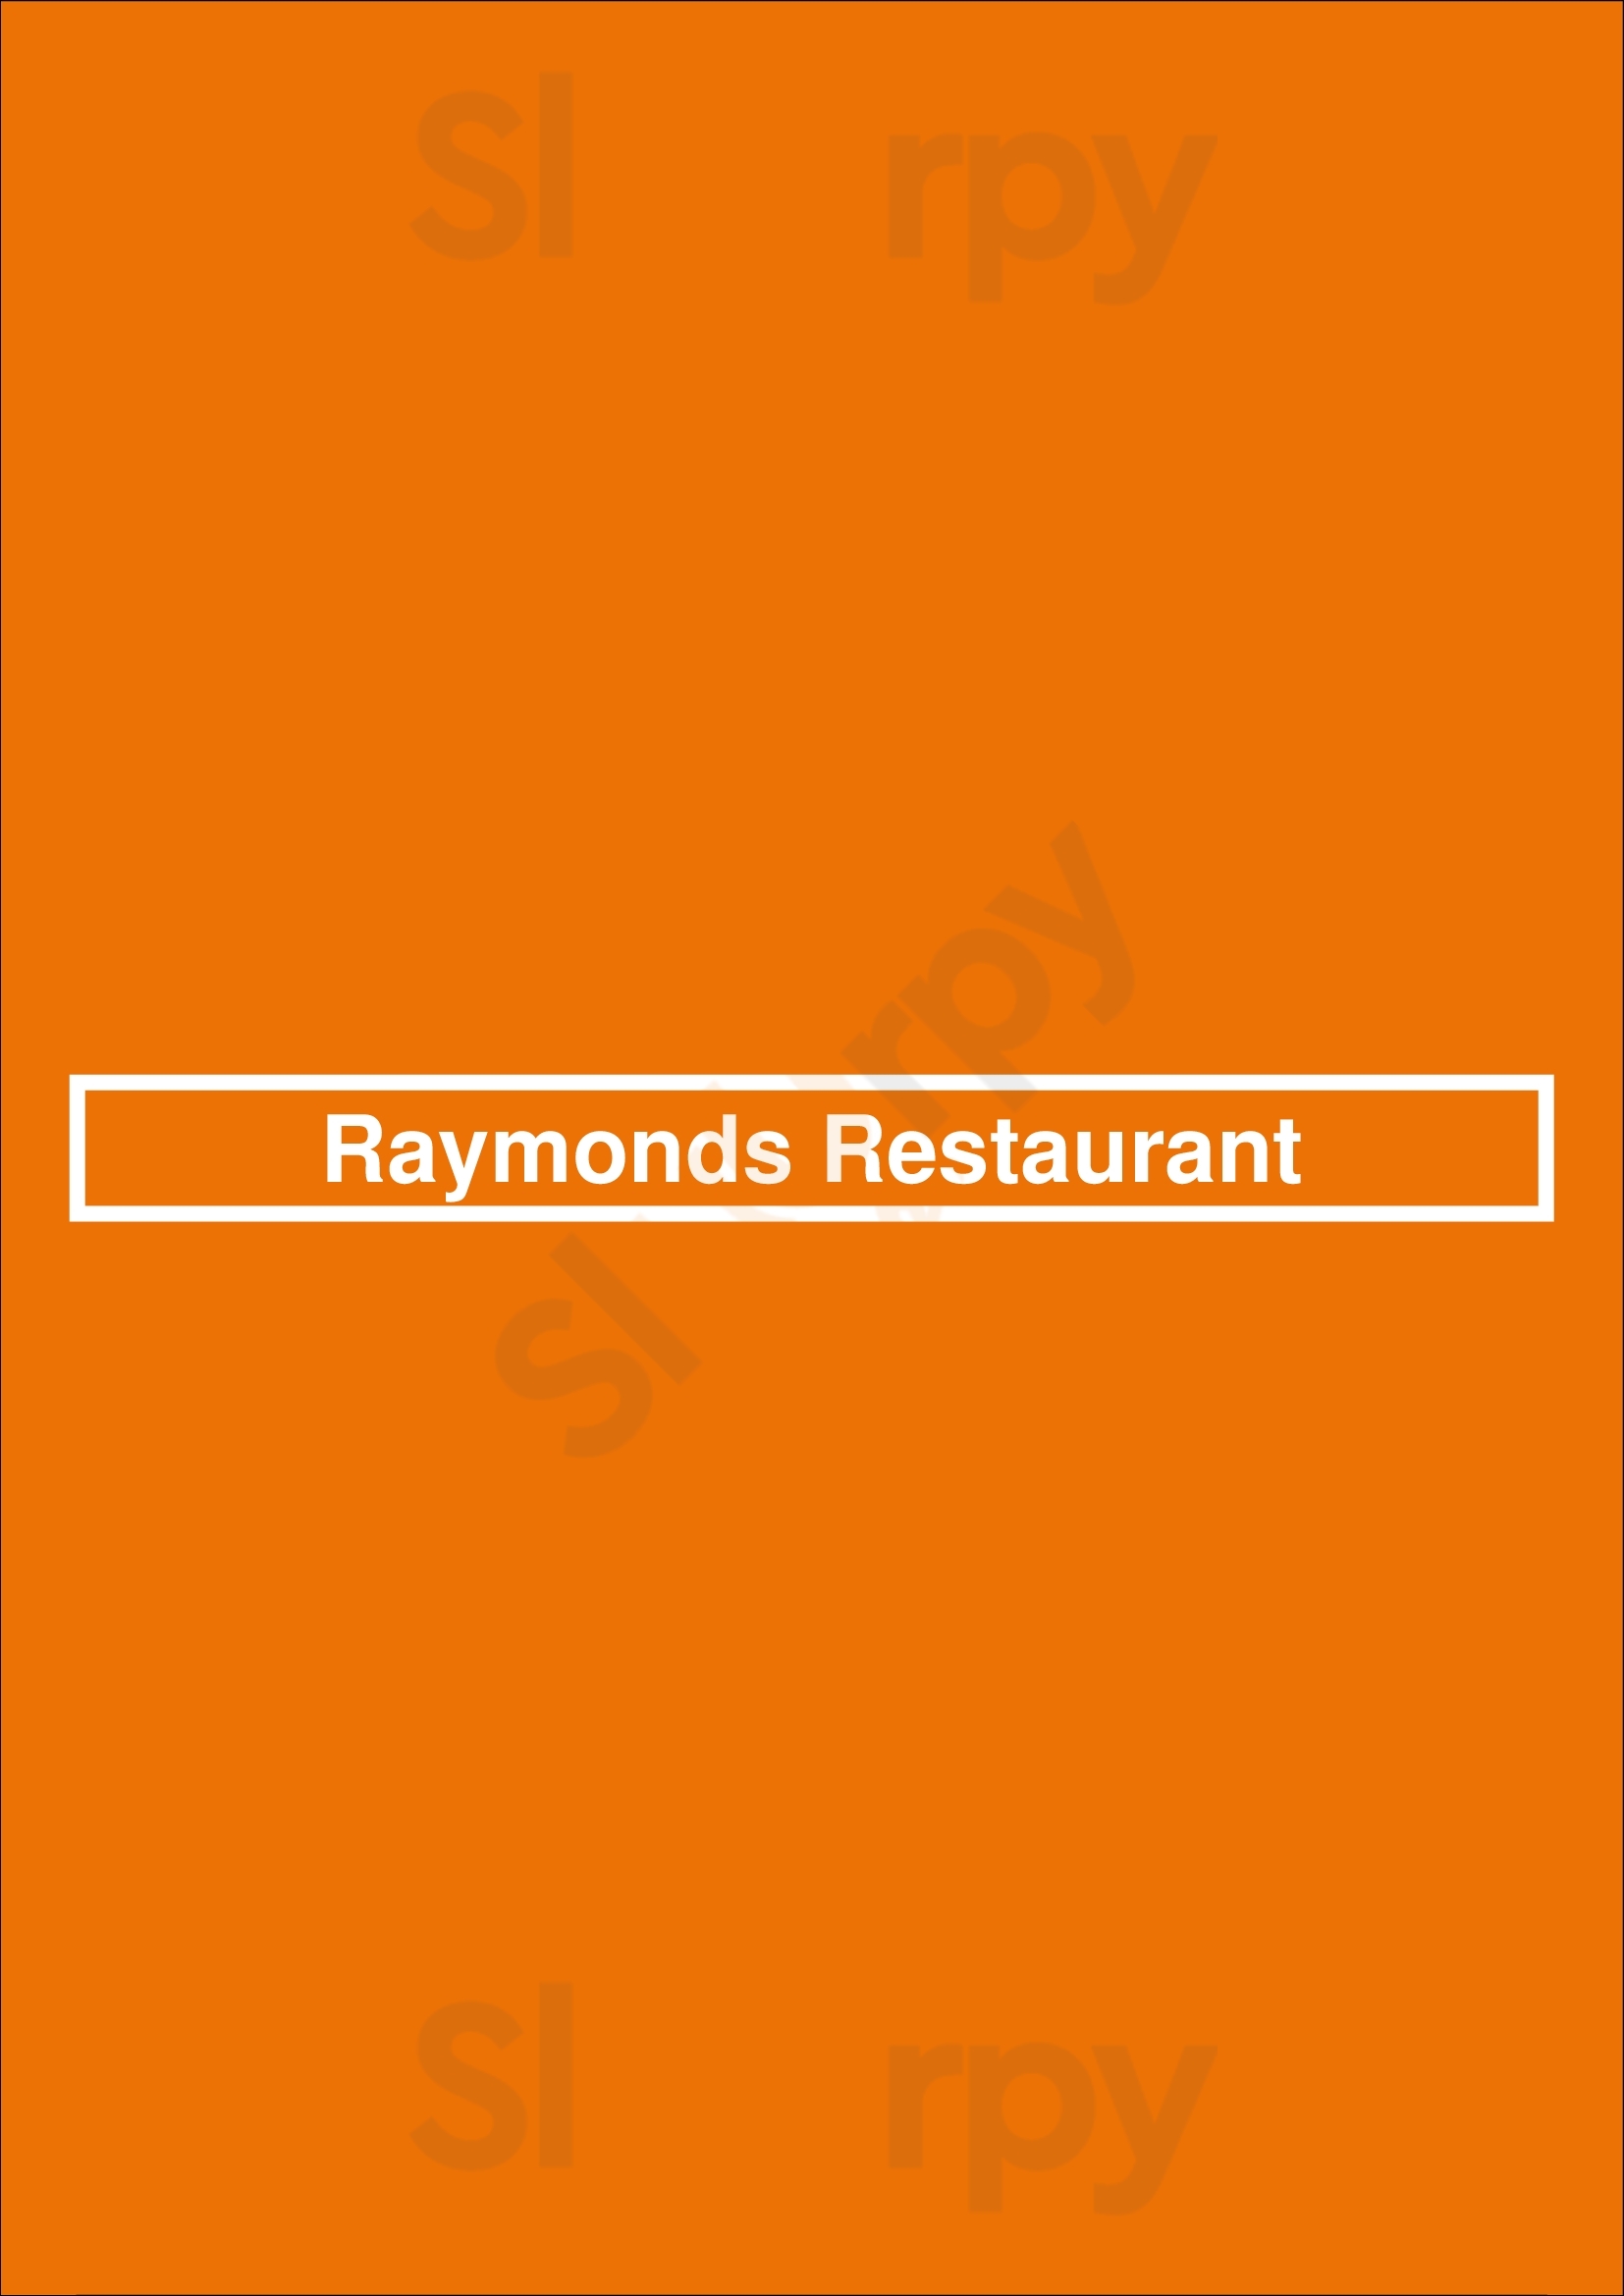 Raymonds Restaurant St. John's Menu - 1